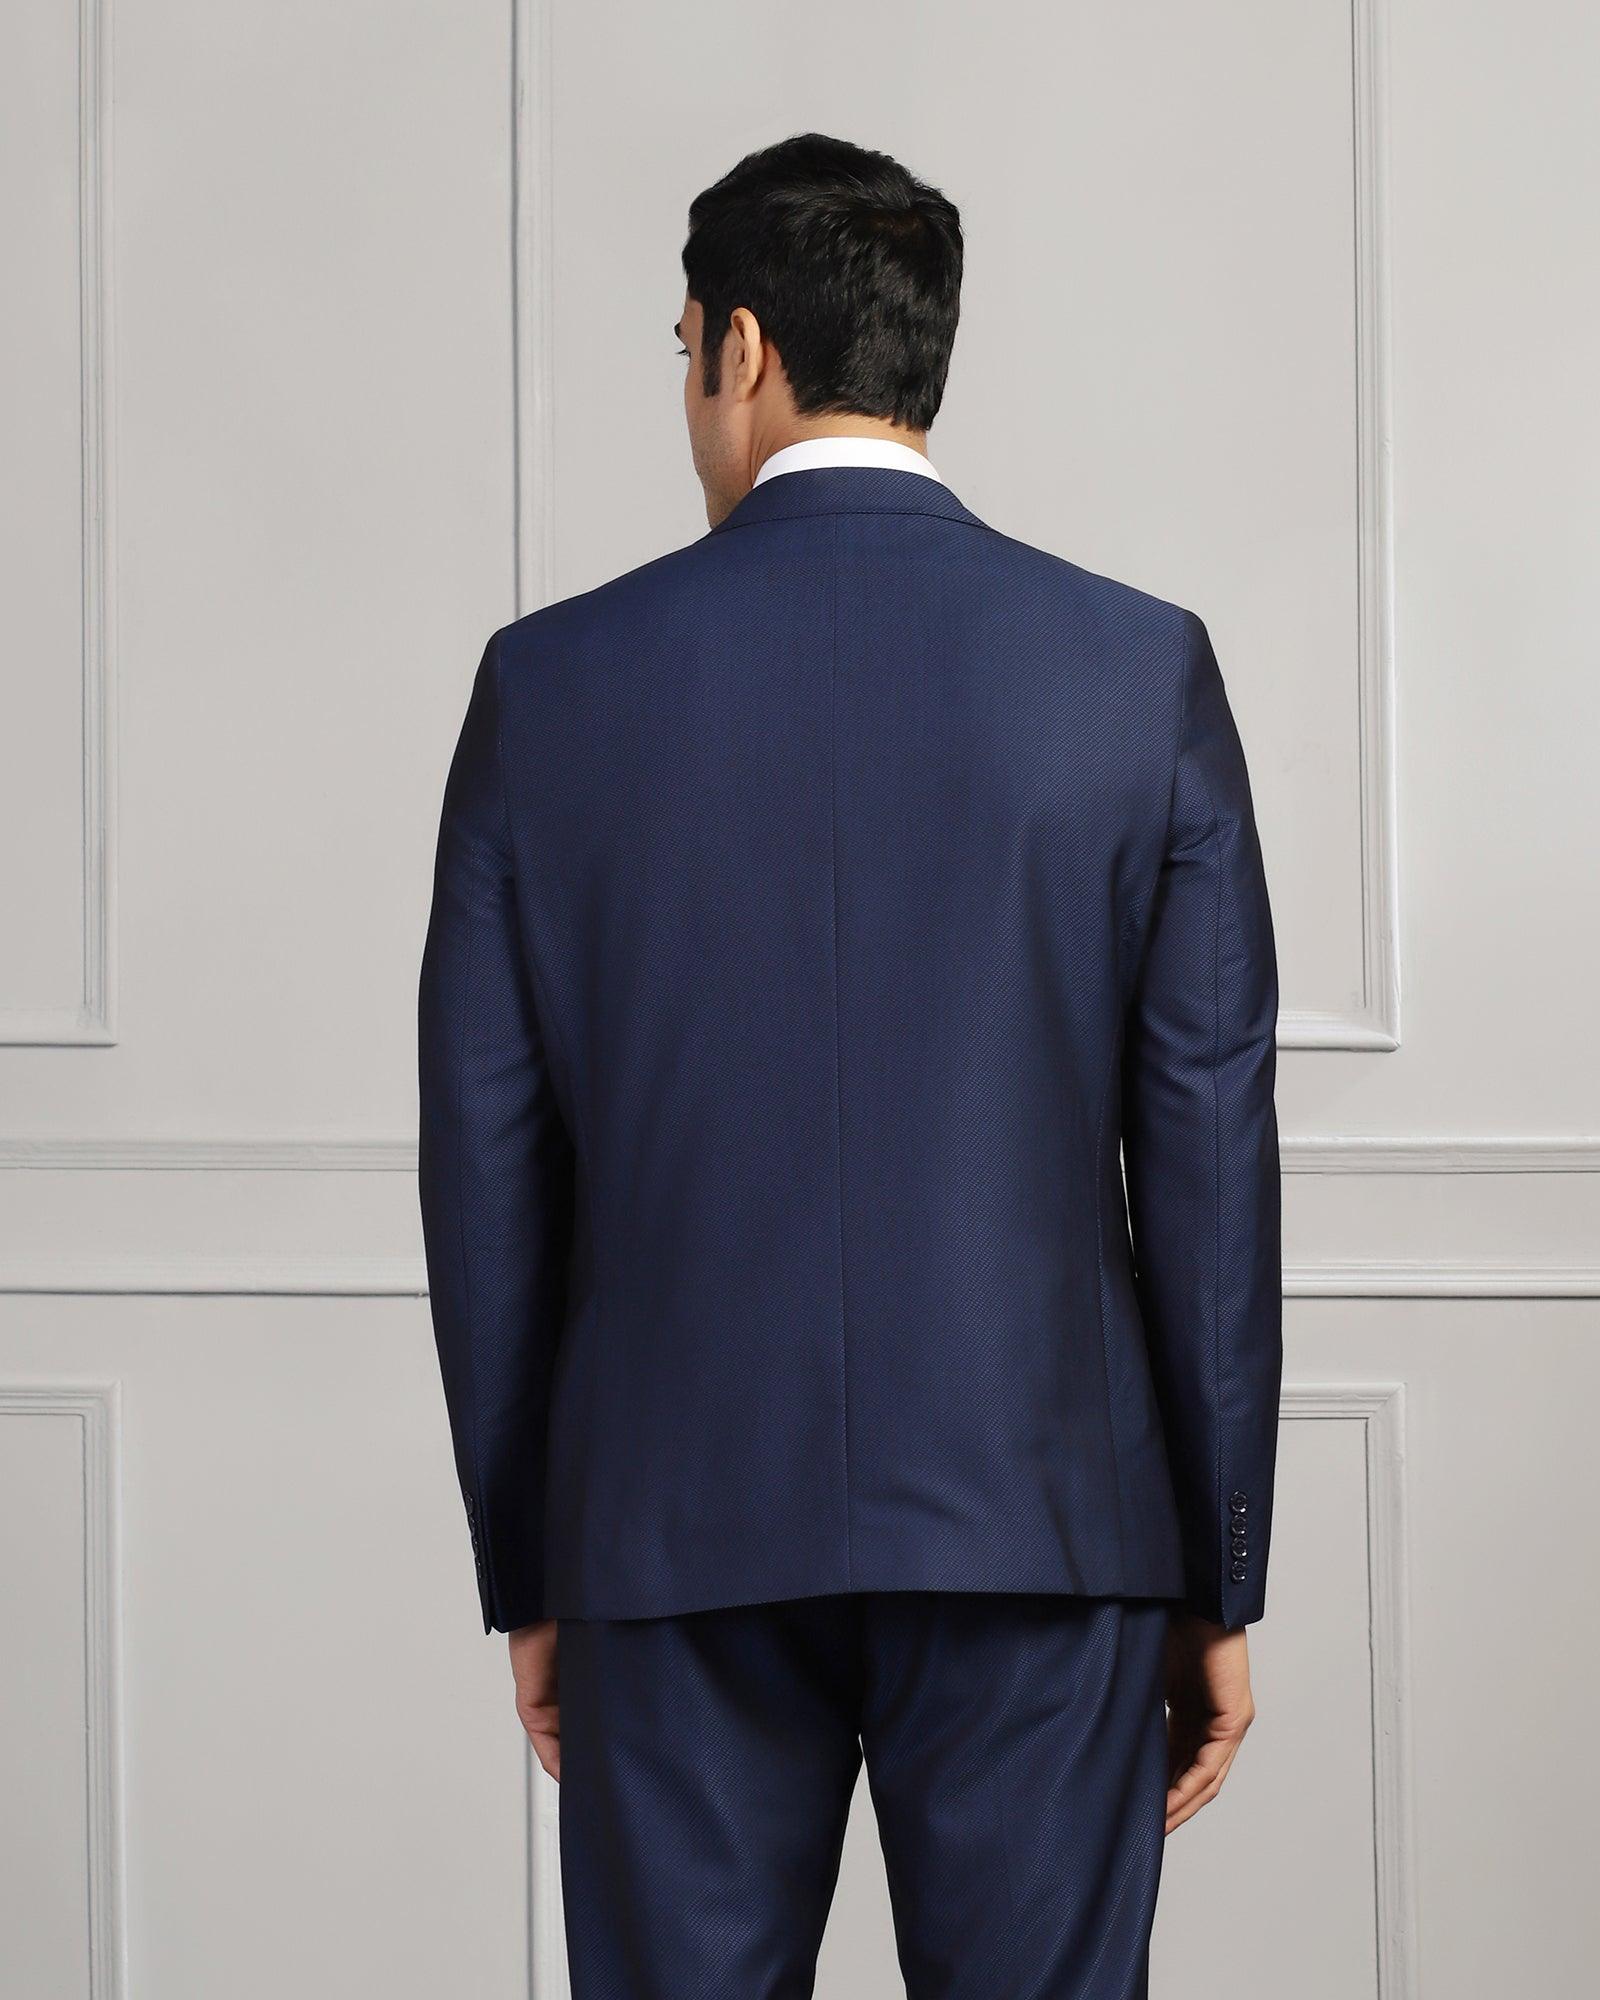 Three Piece Navy Textured Formal Suit - Mercer